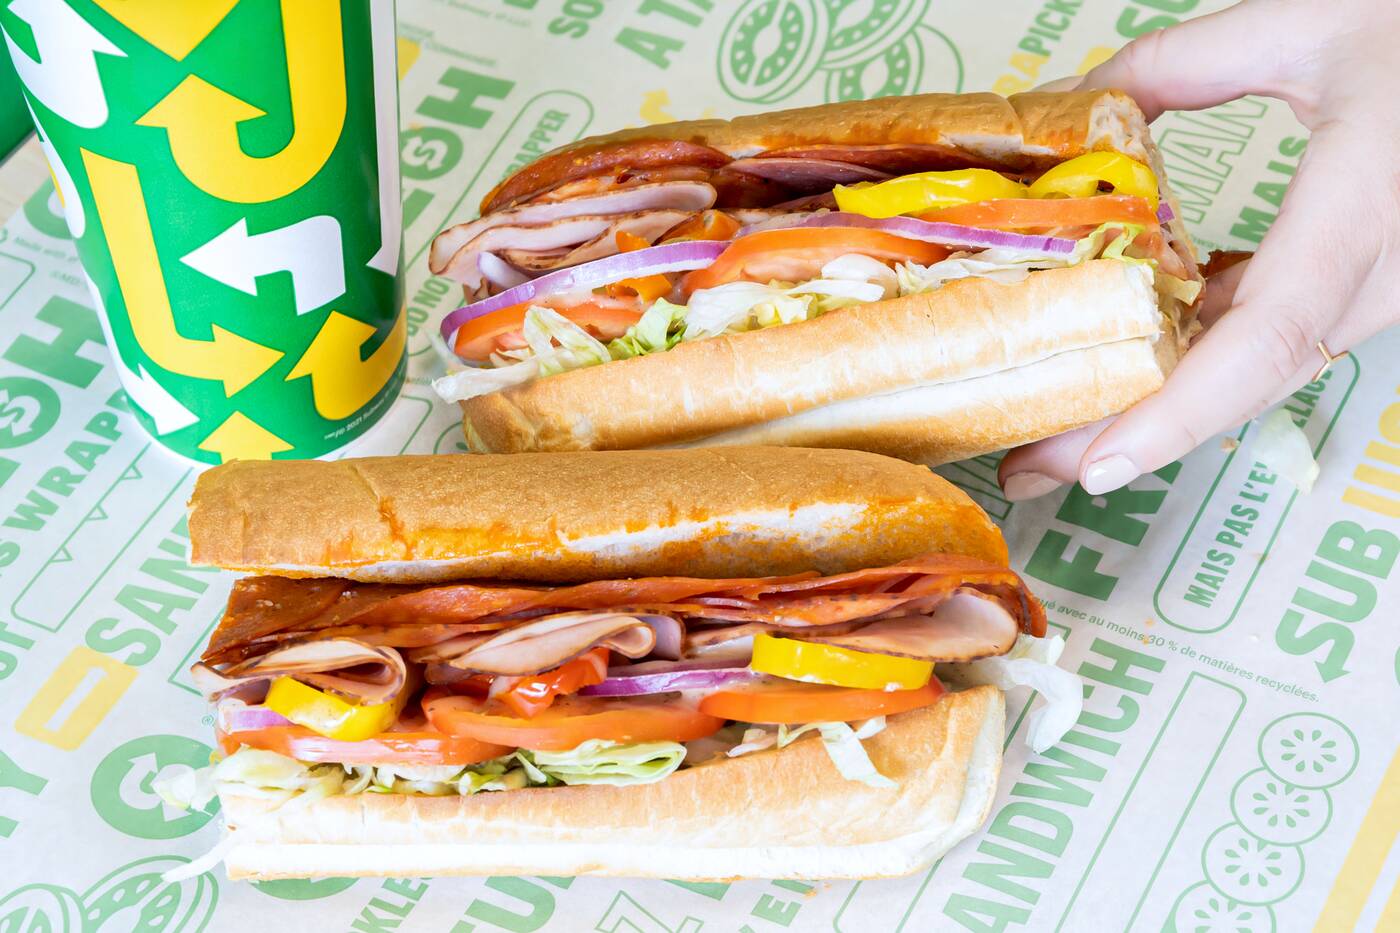 Subway's Suprimo Sandwich